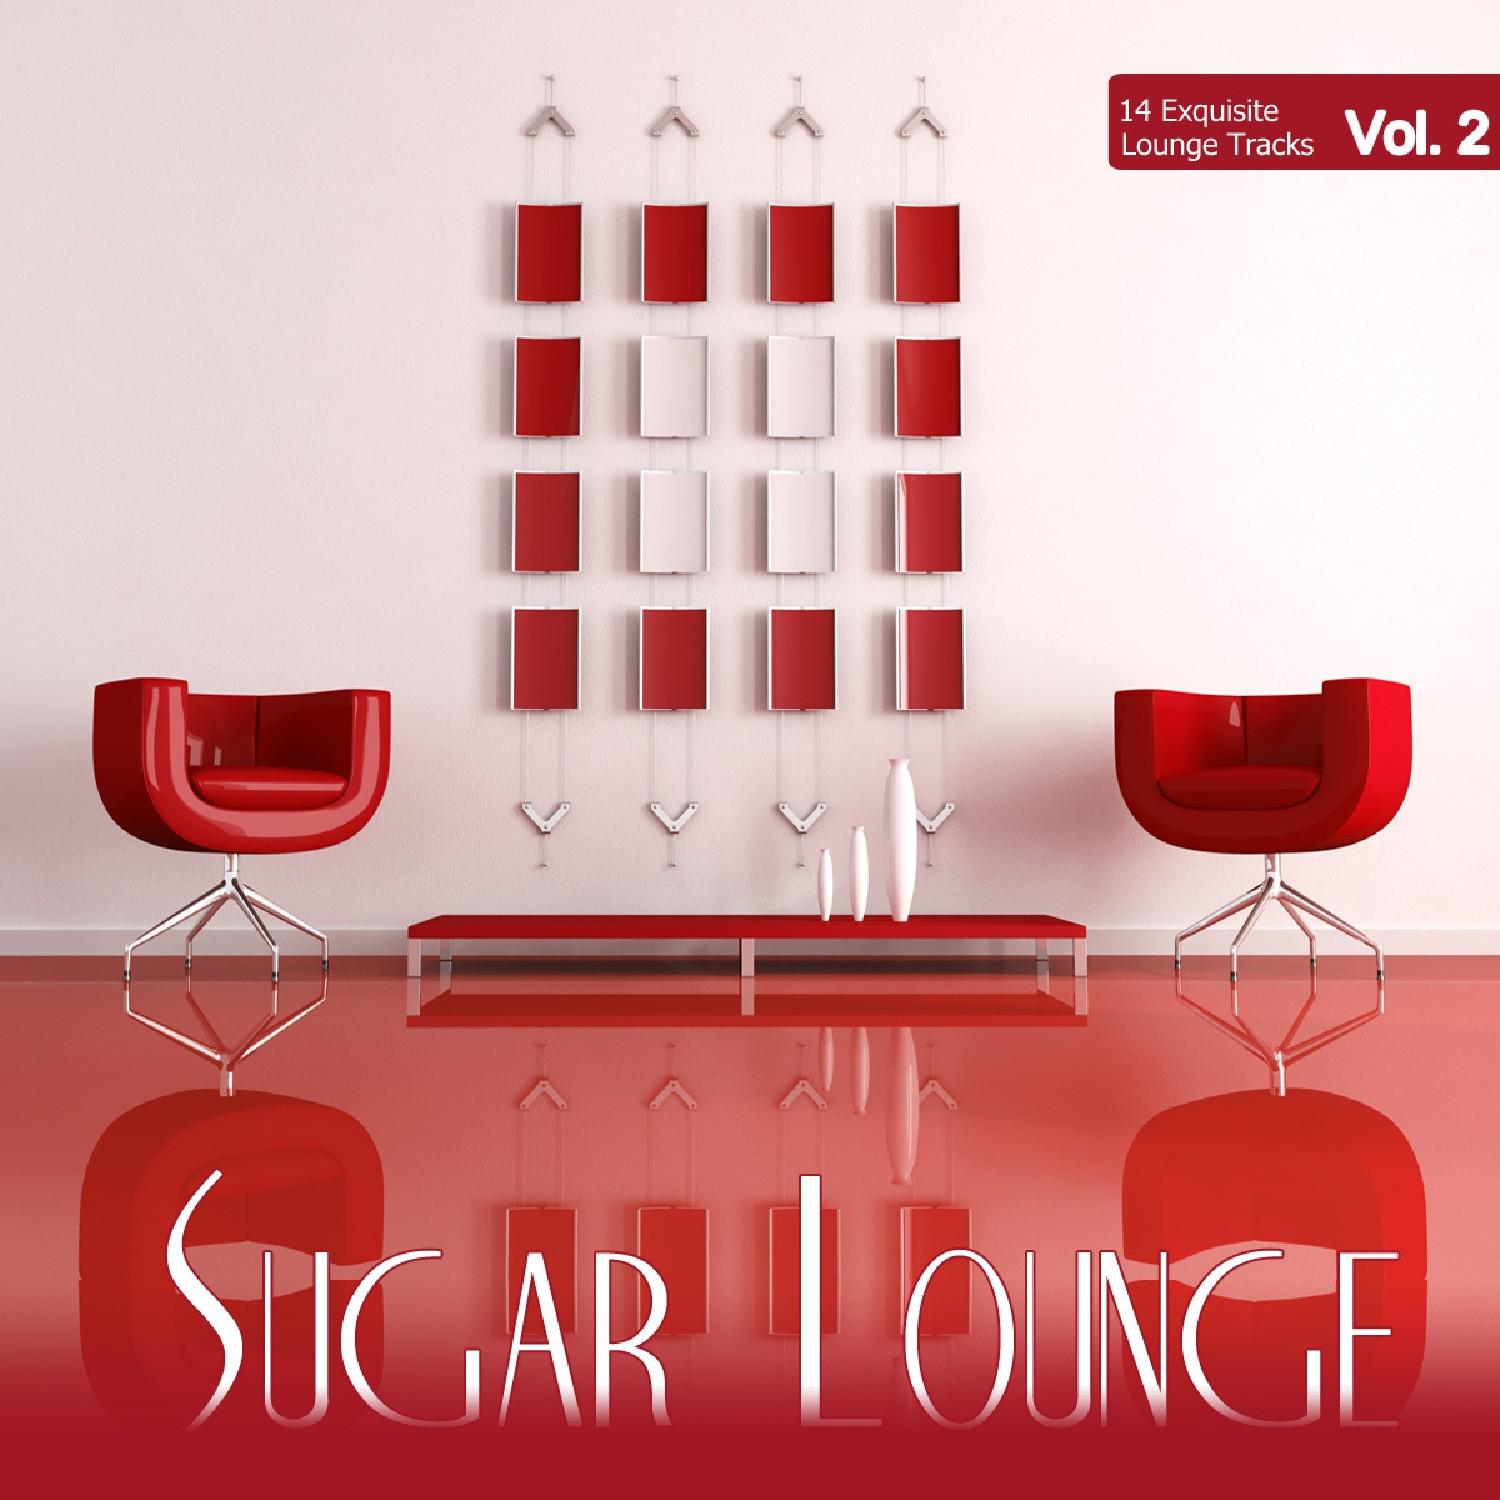 Sugar Lounge Vol. 2